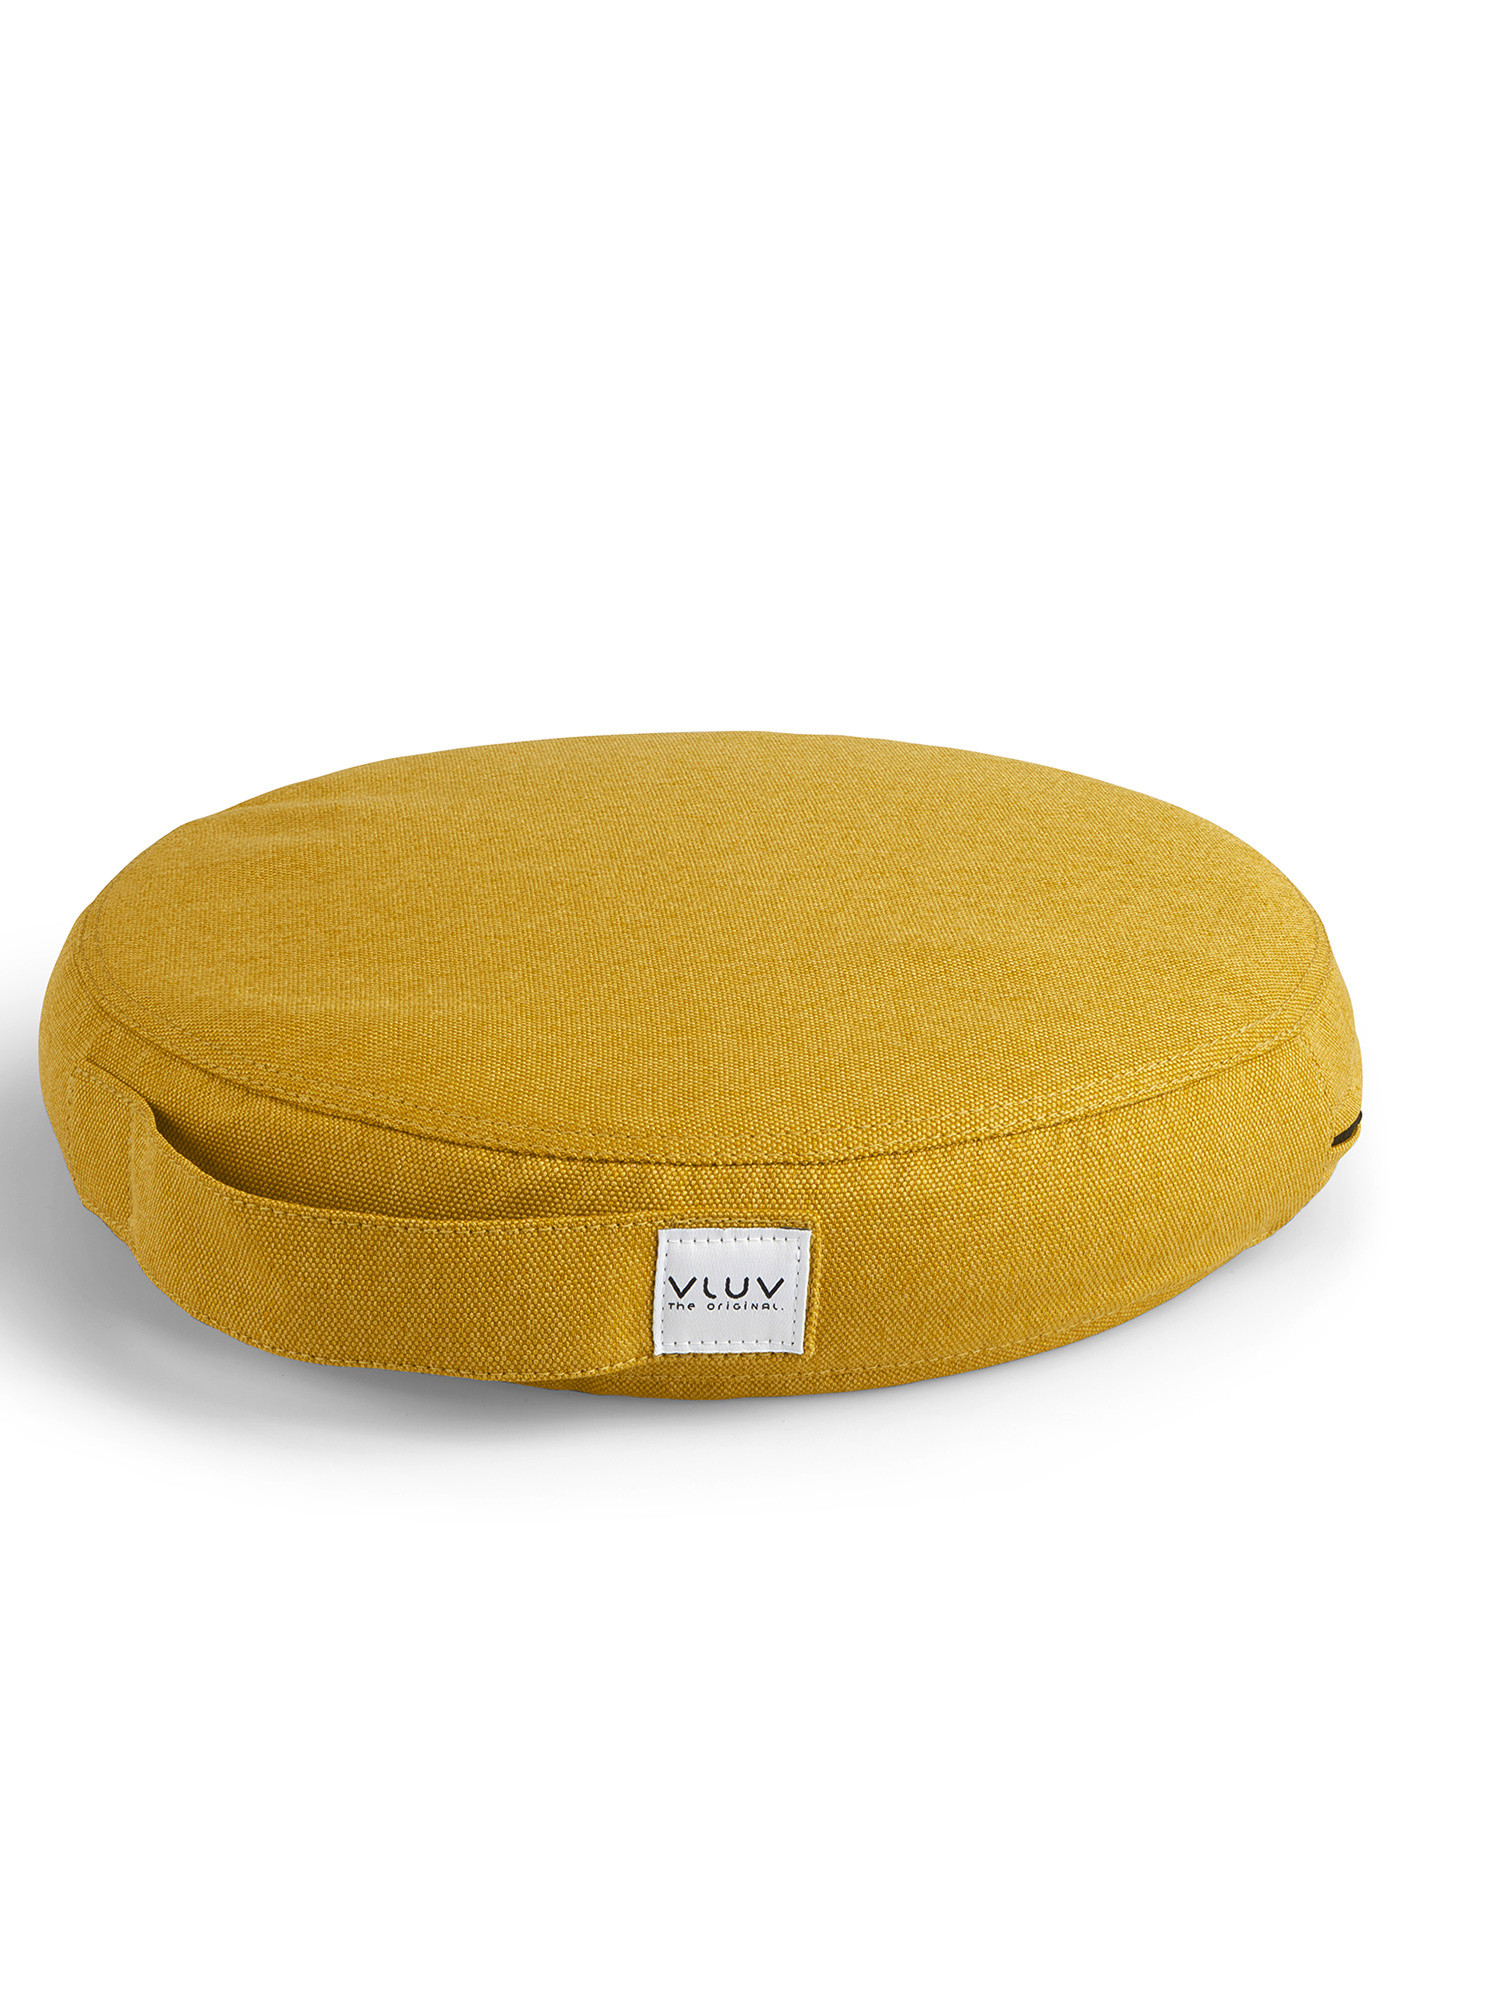 VLUV cuscino per equilibrio Pil&ped Leiv, Yellow, large image number 0